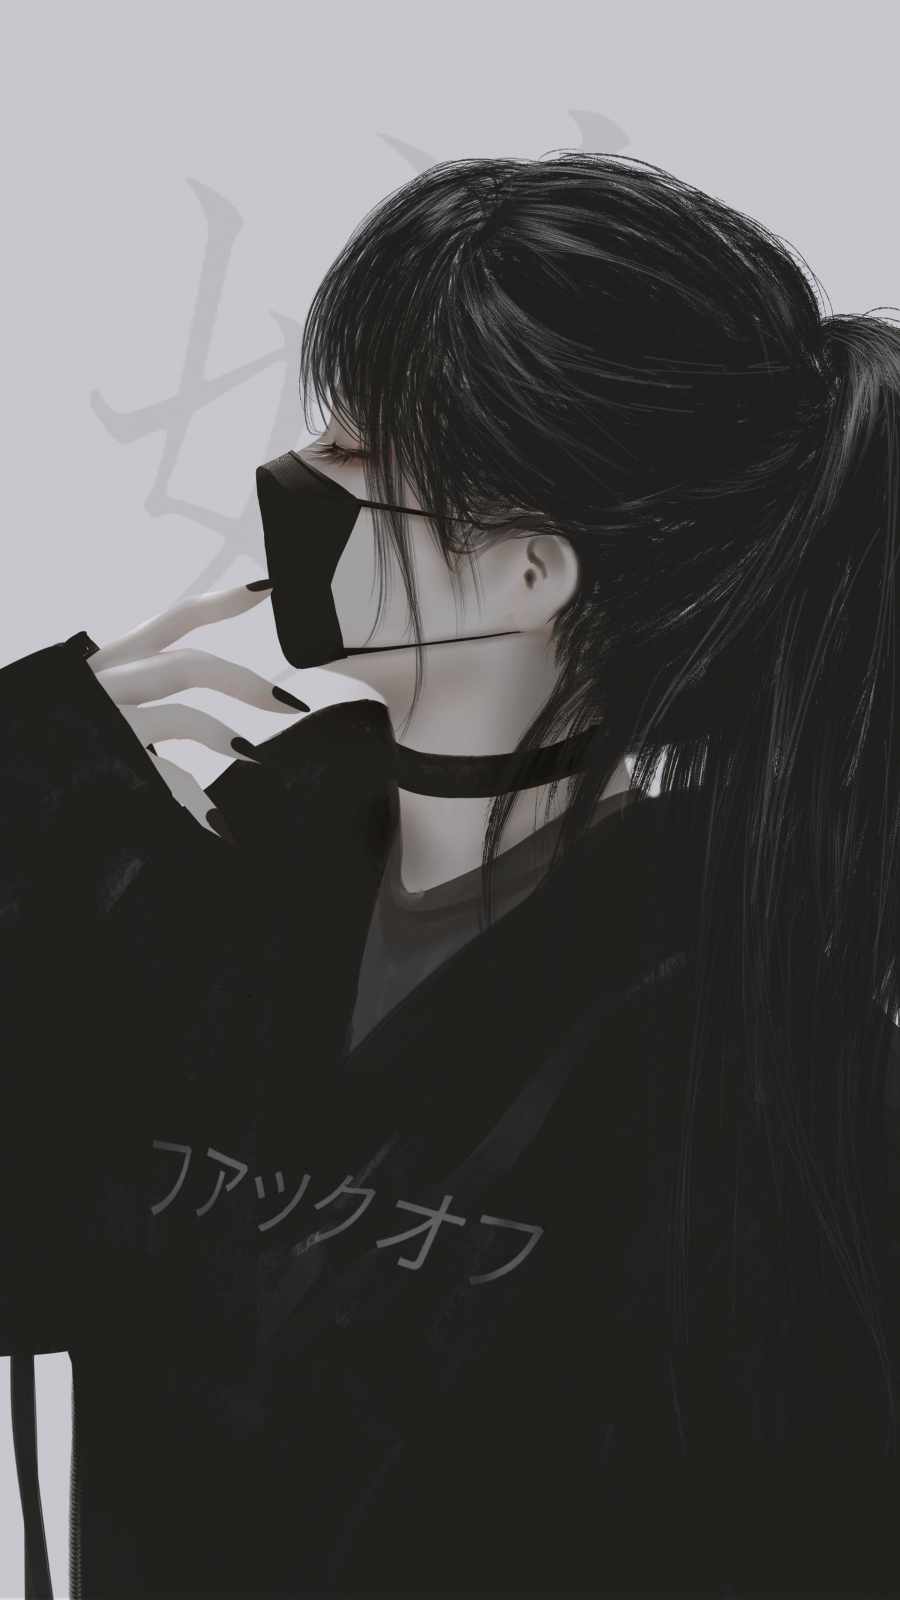 Black mask girl iphone wallpaper